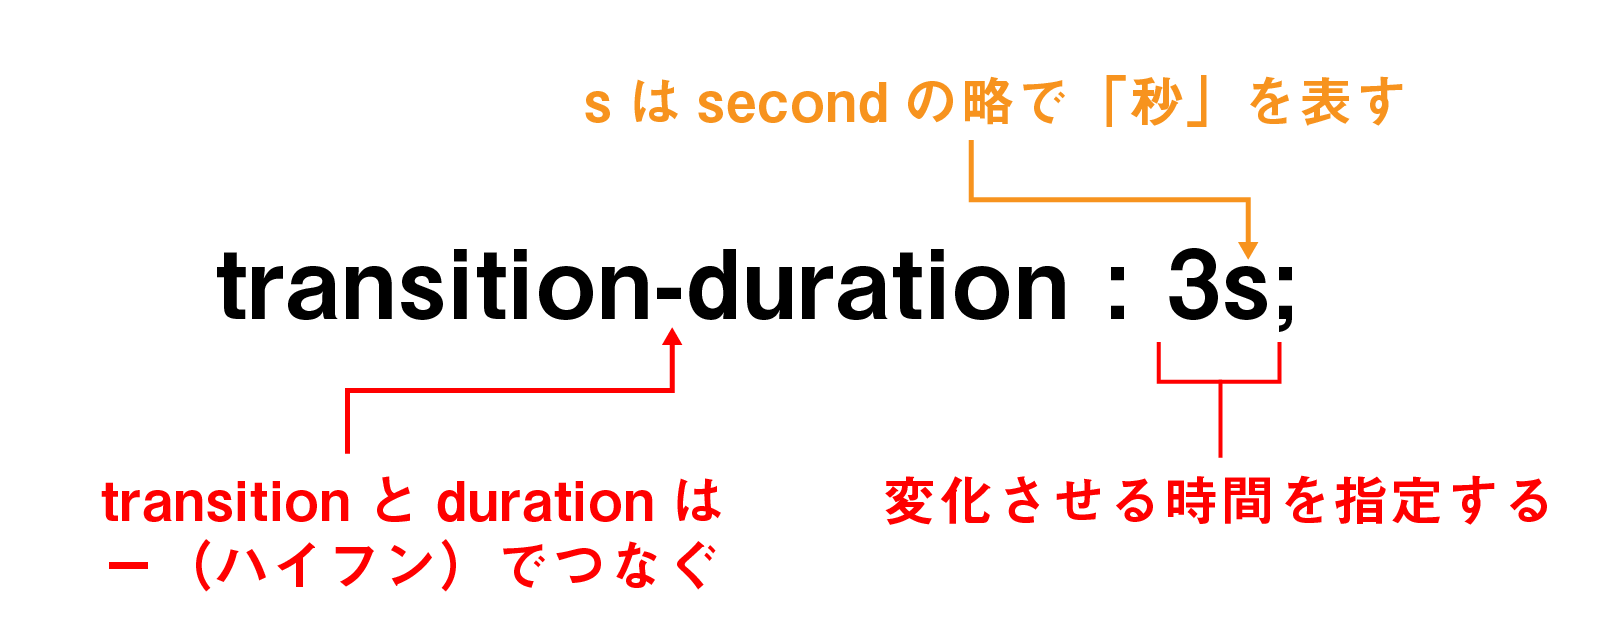 transition-duration